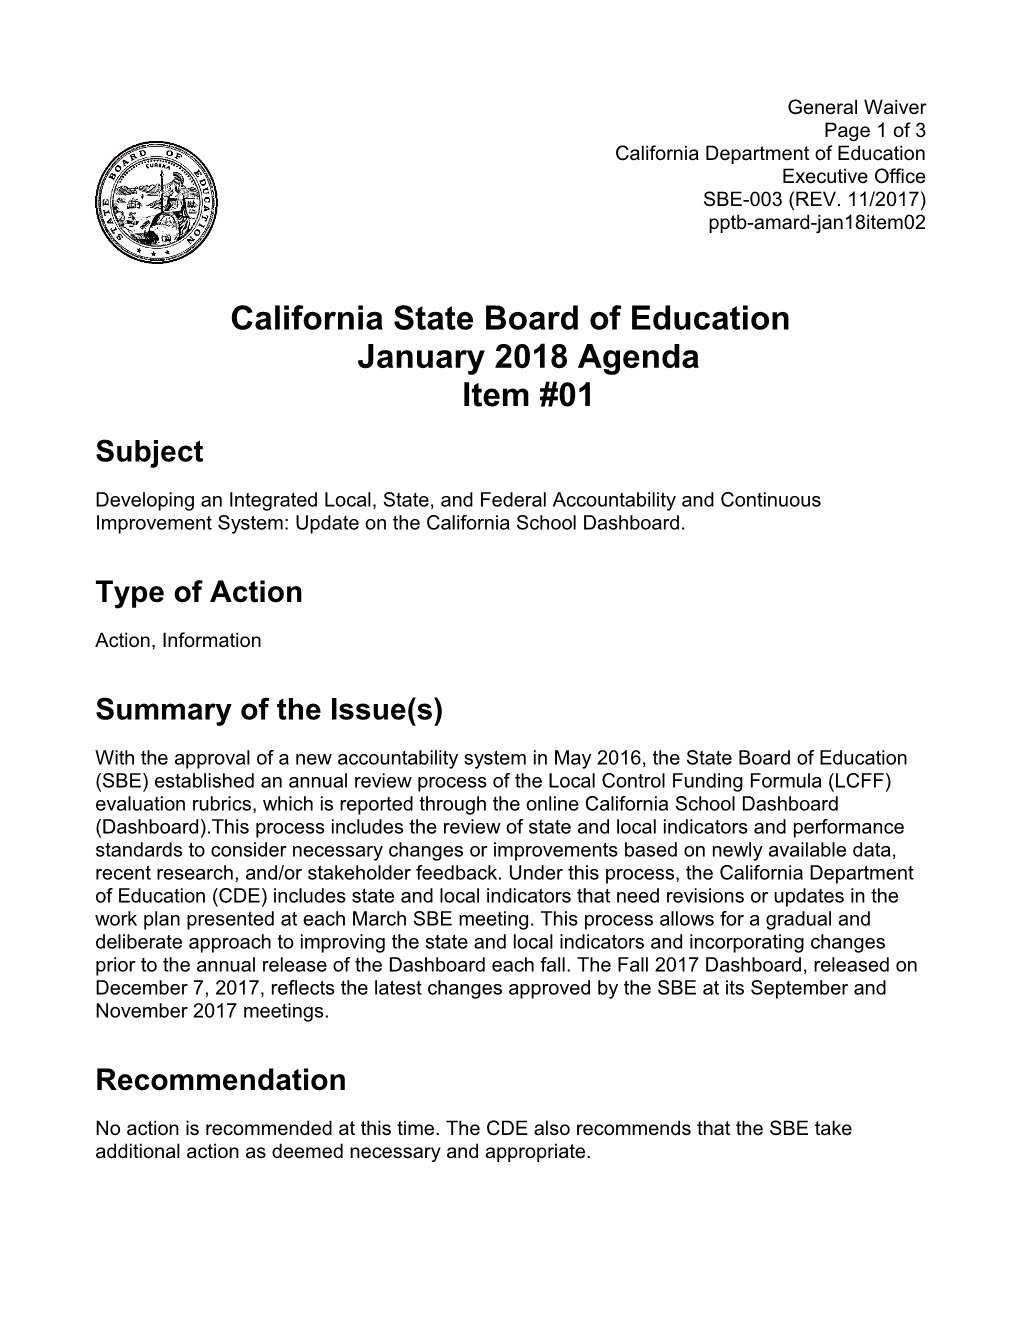 January 2018 Agenda Item 01 - Meeting Agendas (CA State Board of Education)